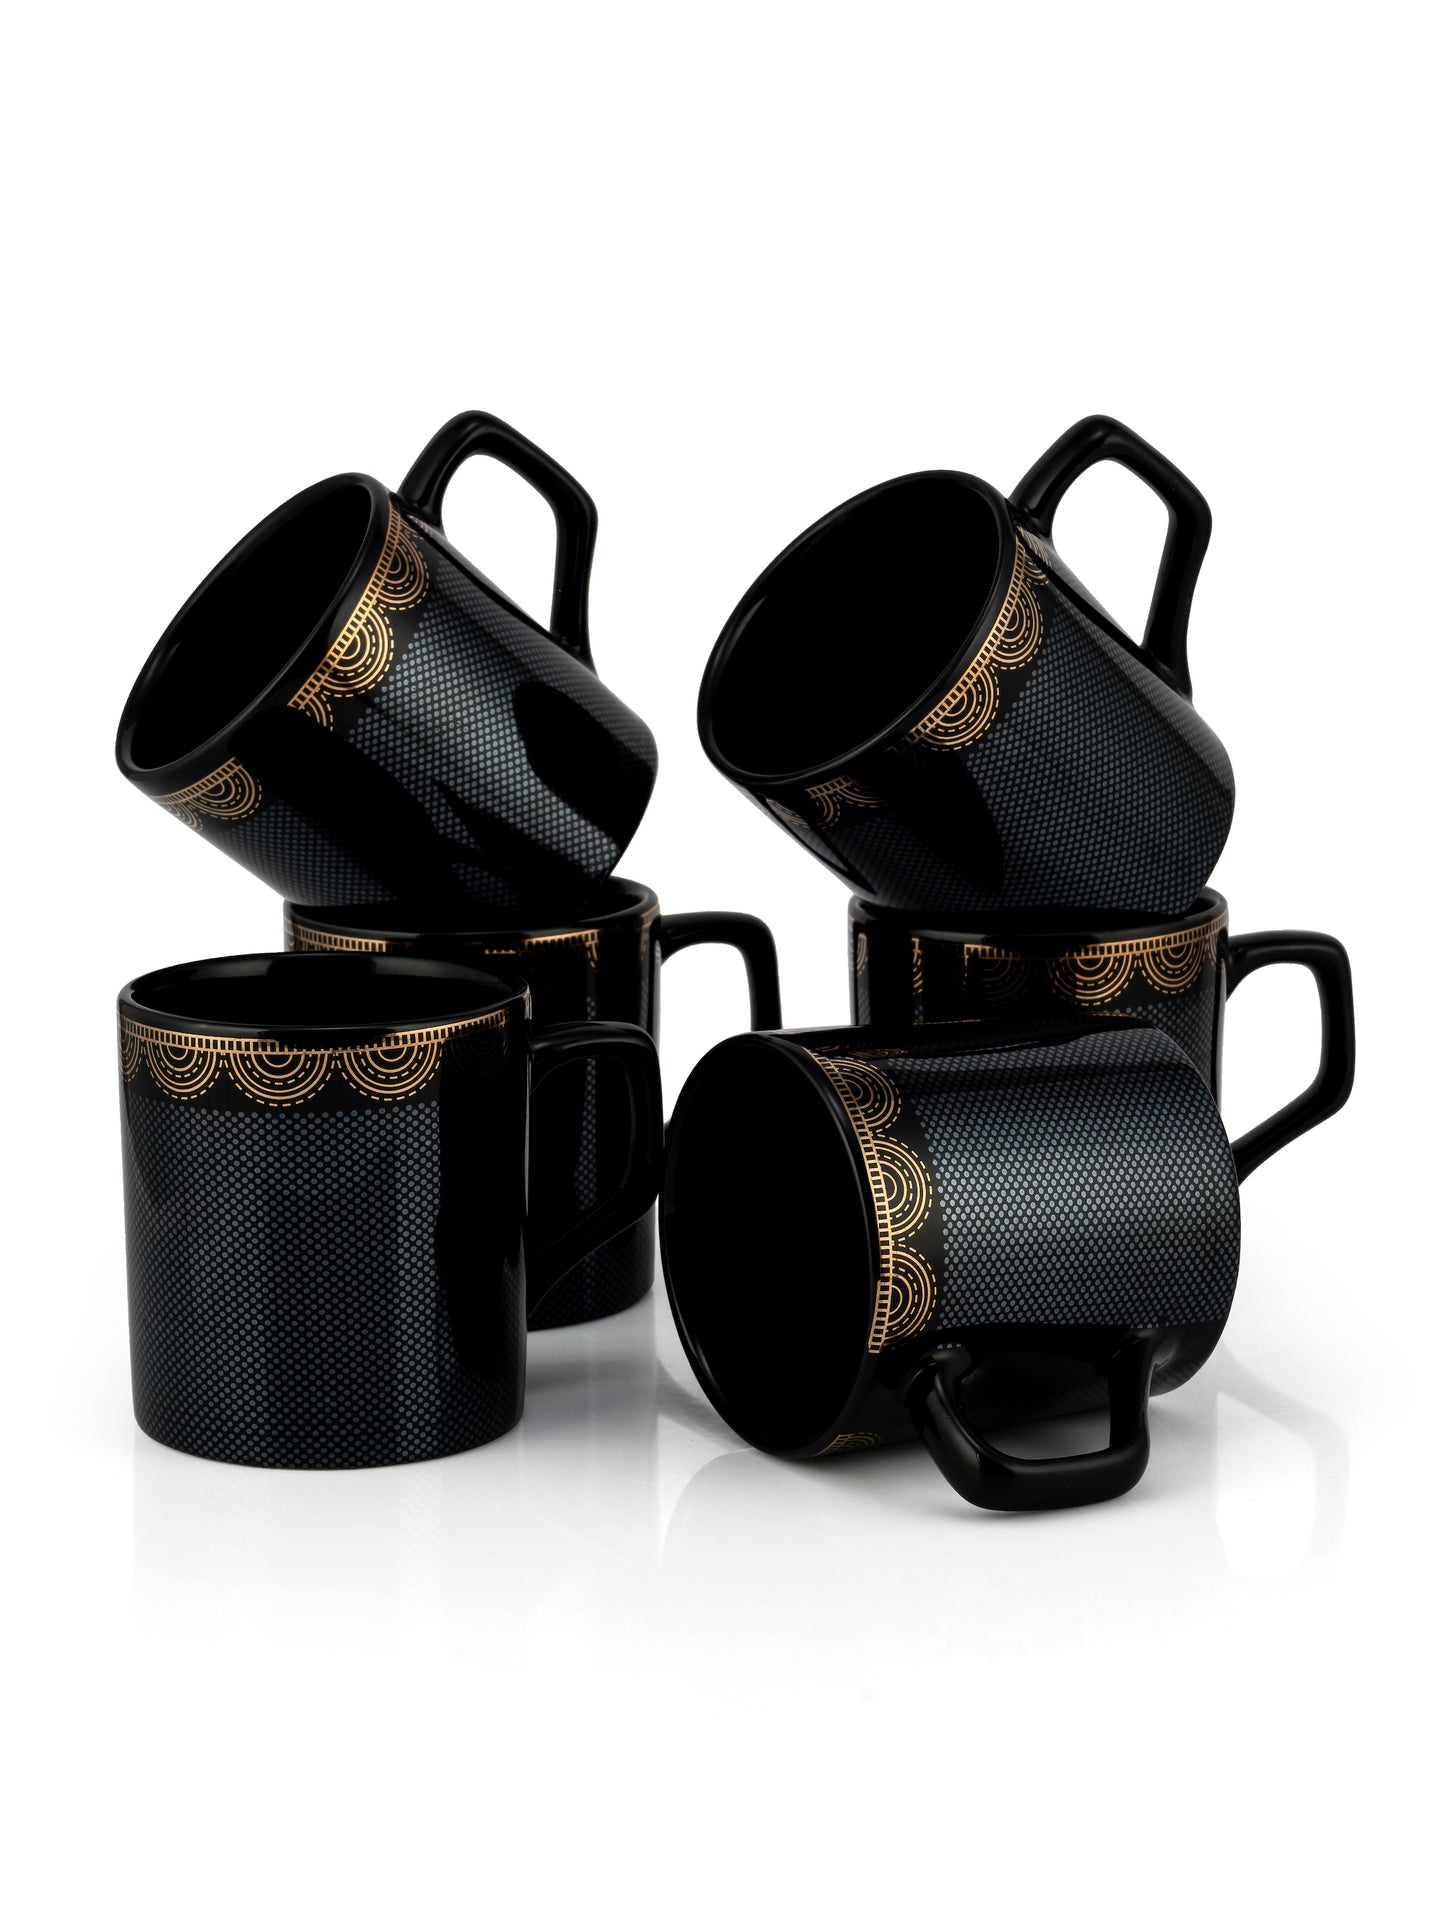 Director Ebony Black Coffee & Tea Mugs, 200ml, Set of 6 (E601)